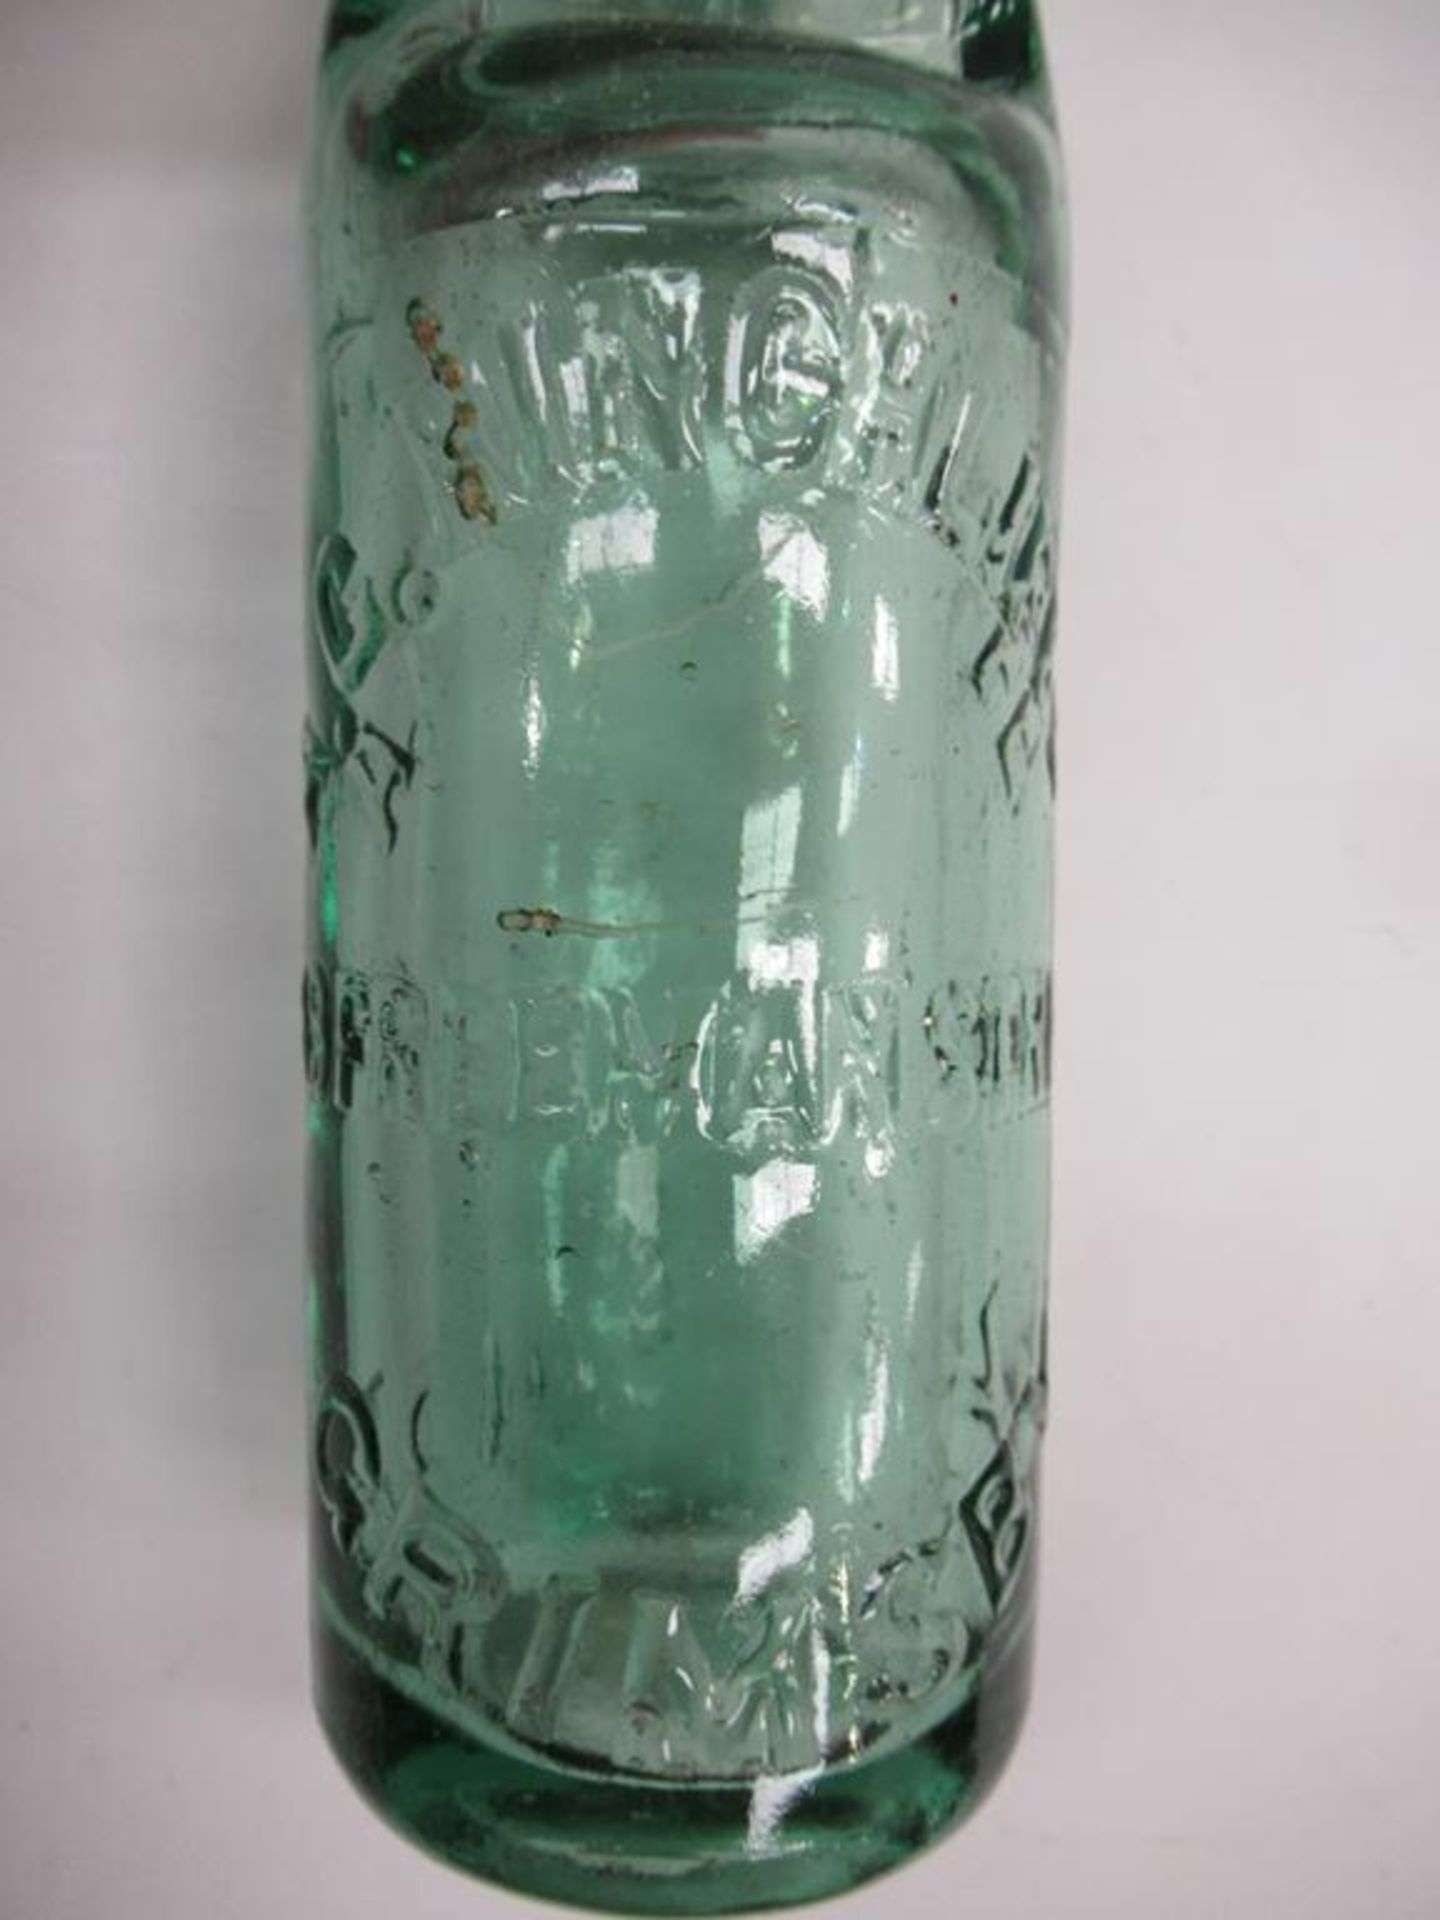 2x Grimsby A.G. Hinchliffe codd bottles (10oz) - Image 6 of 8